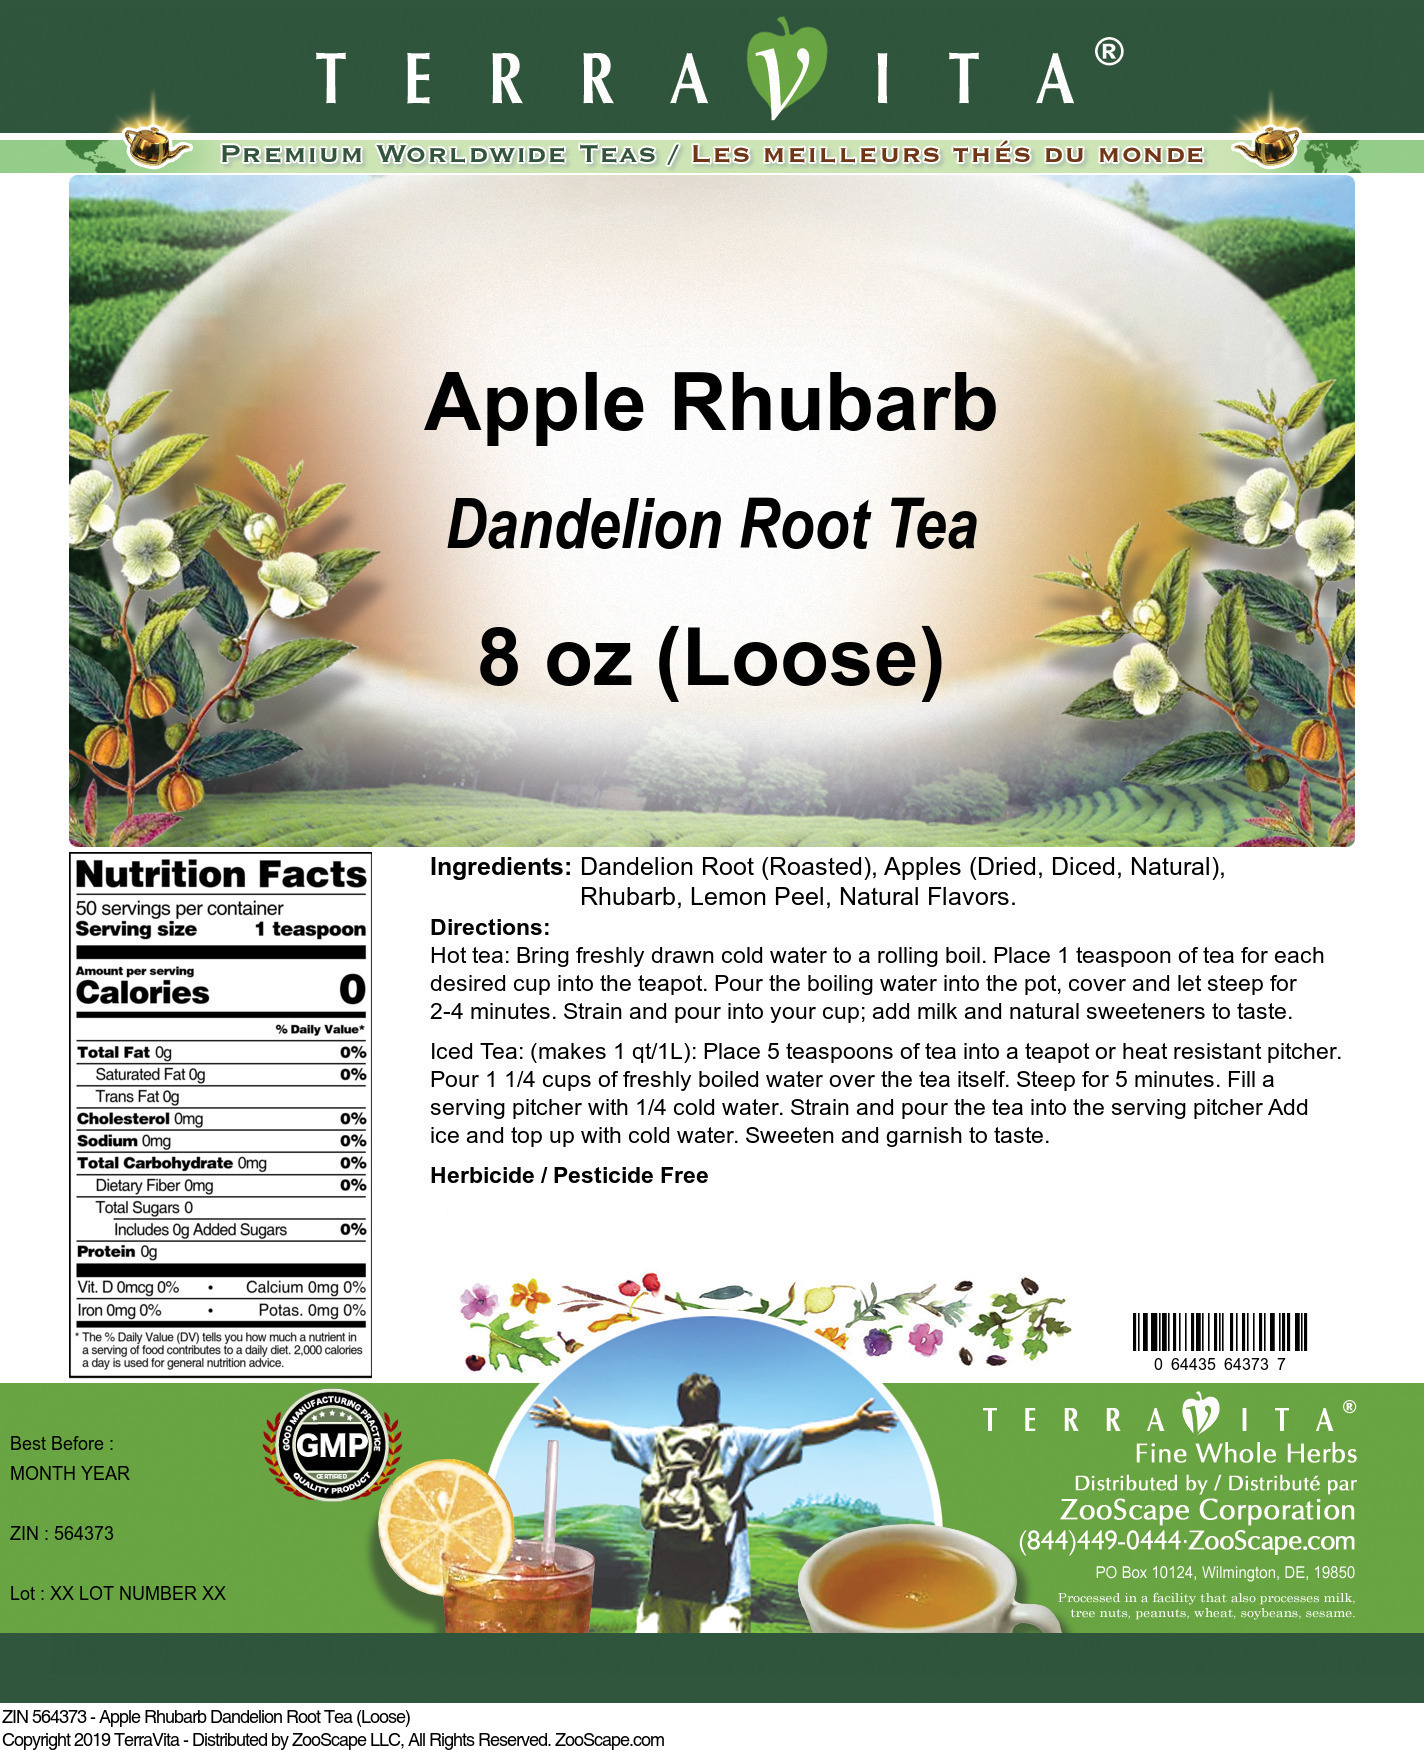 Apple Rhubarb Dandelion Root Tea (Loose) - Label